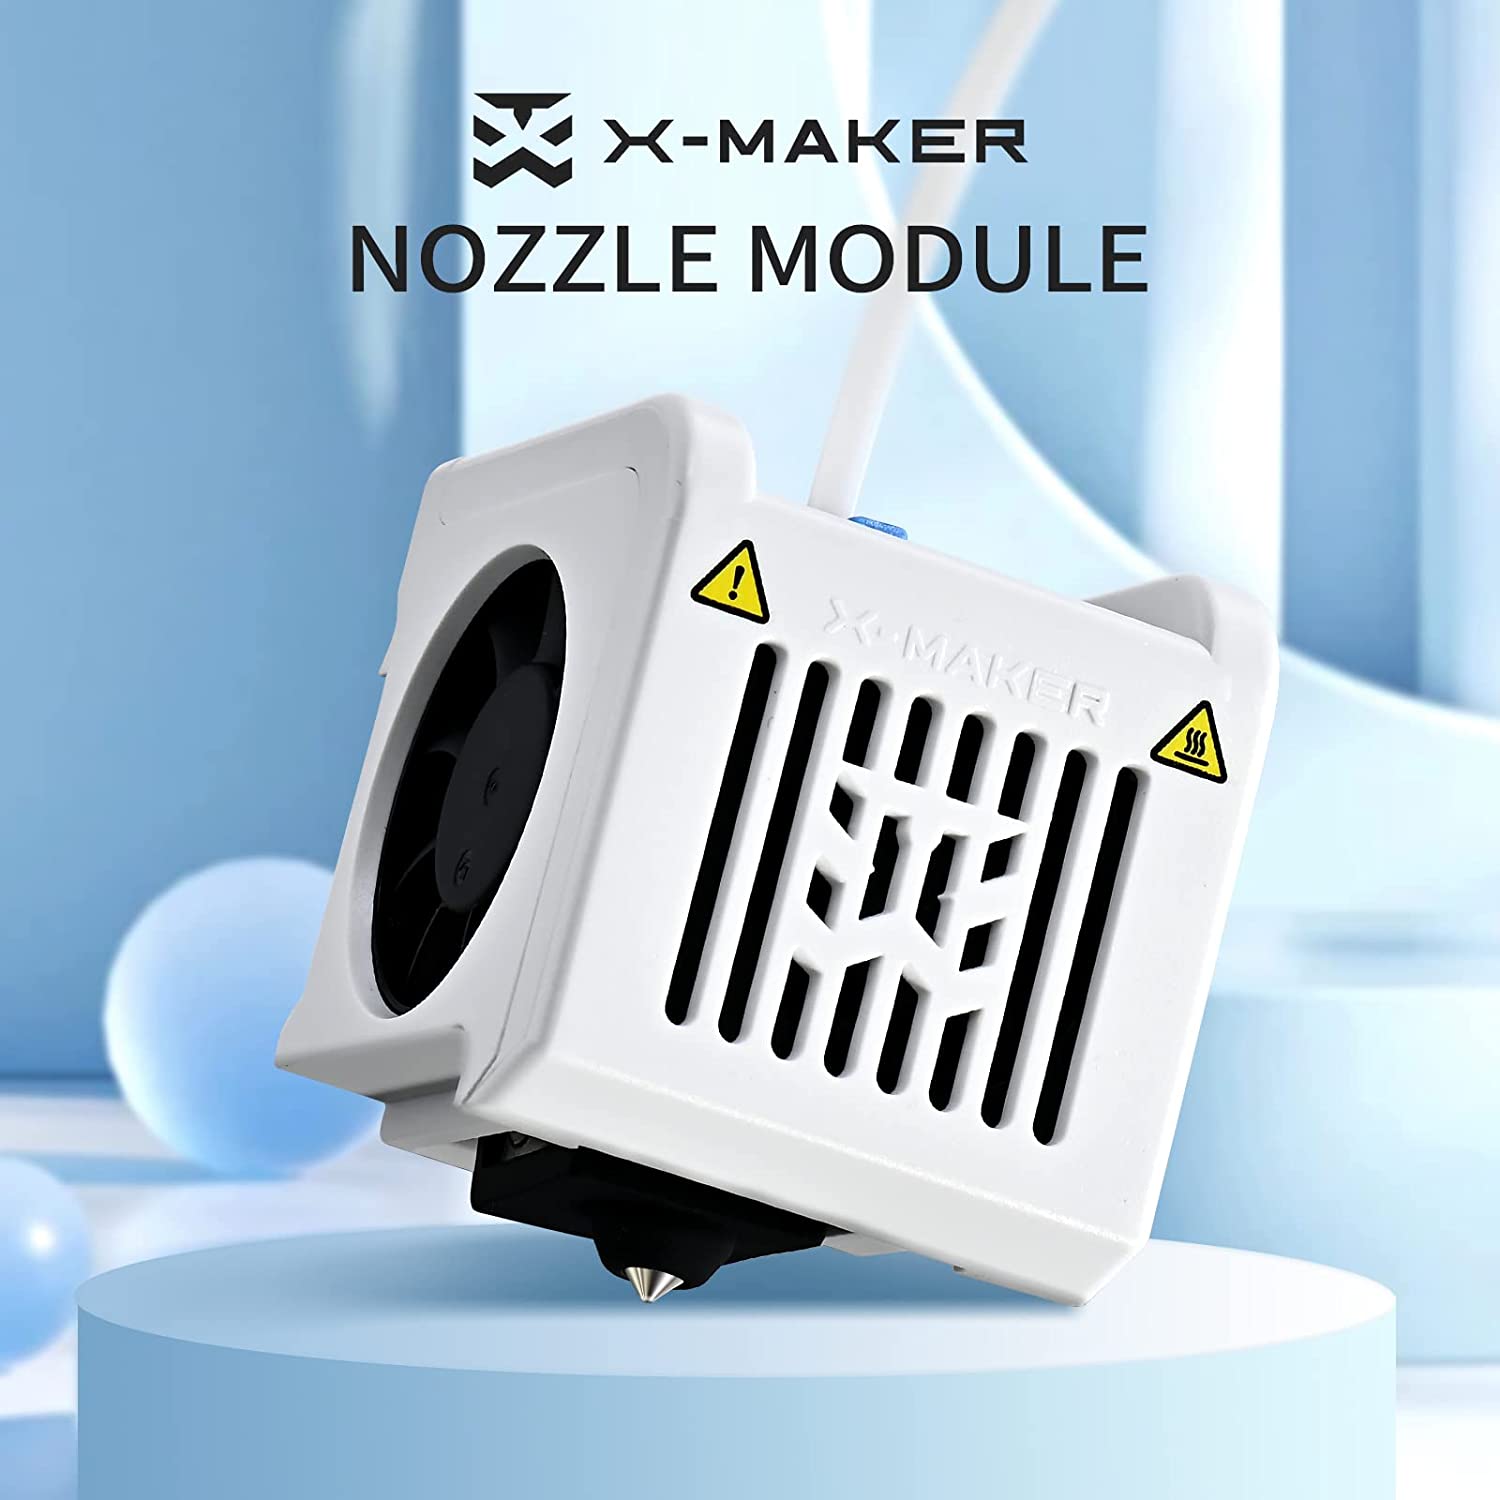 AOSEED 3D Pinter Hotend Nozzle Module for X-MAKER 3D Printer